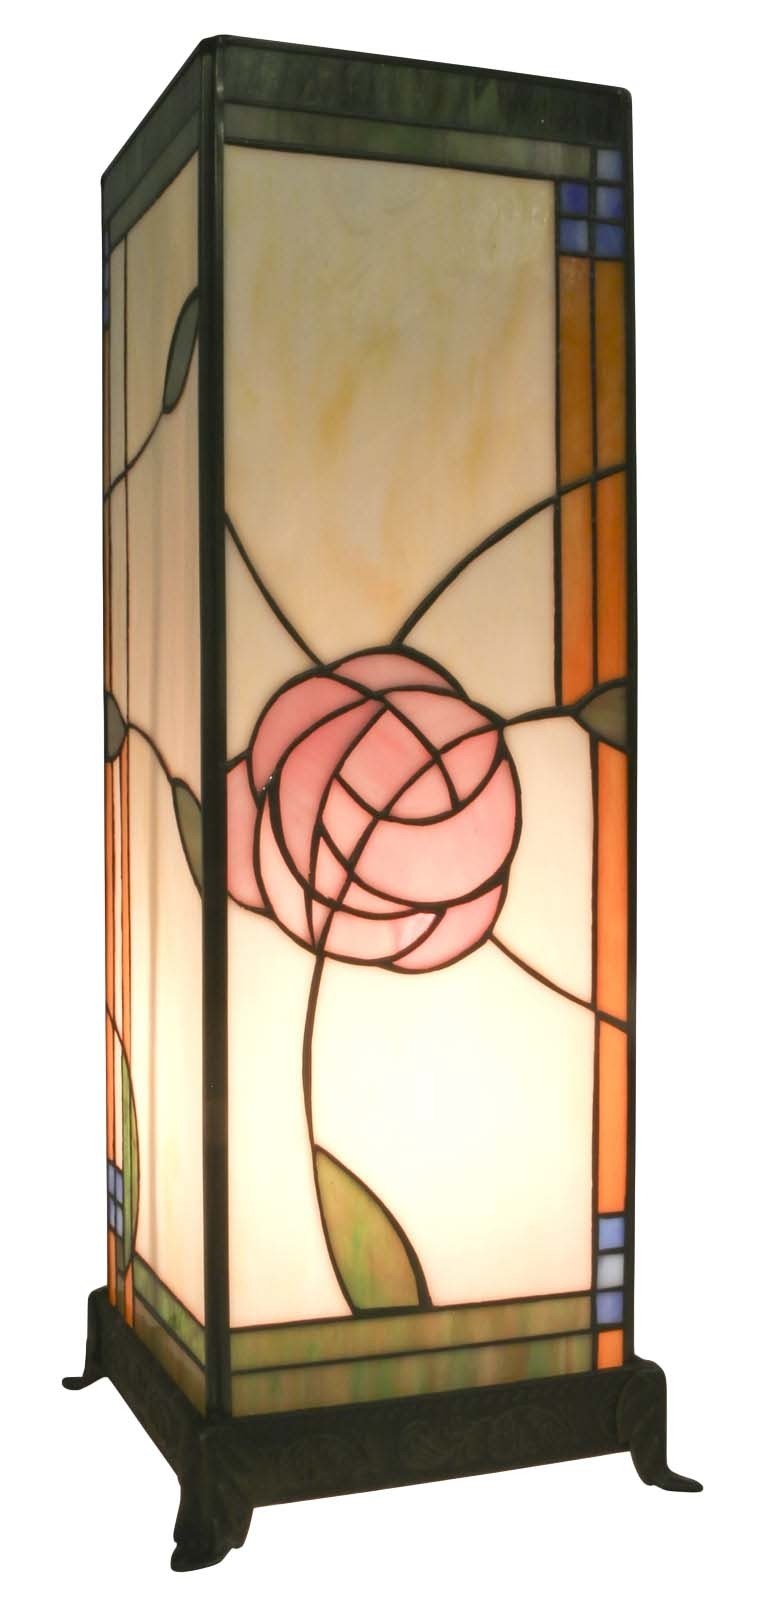 Tiffany Style Table Lamp Mackintosh Rose Design Square Free Bulb 46.5cm